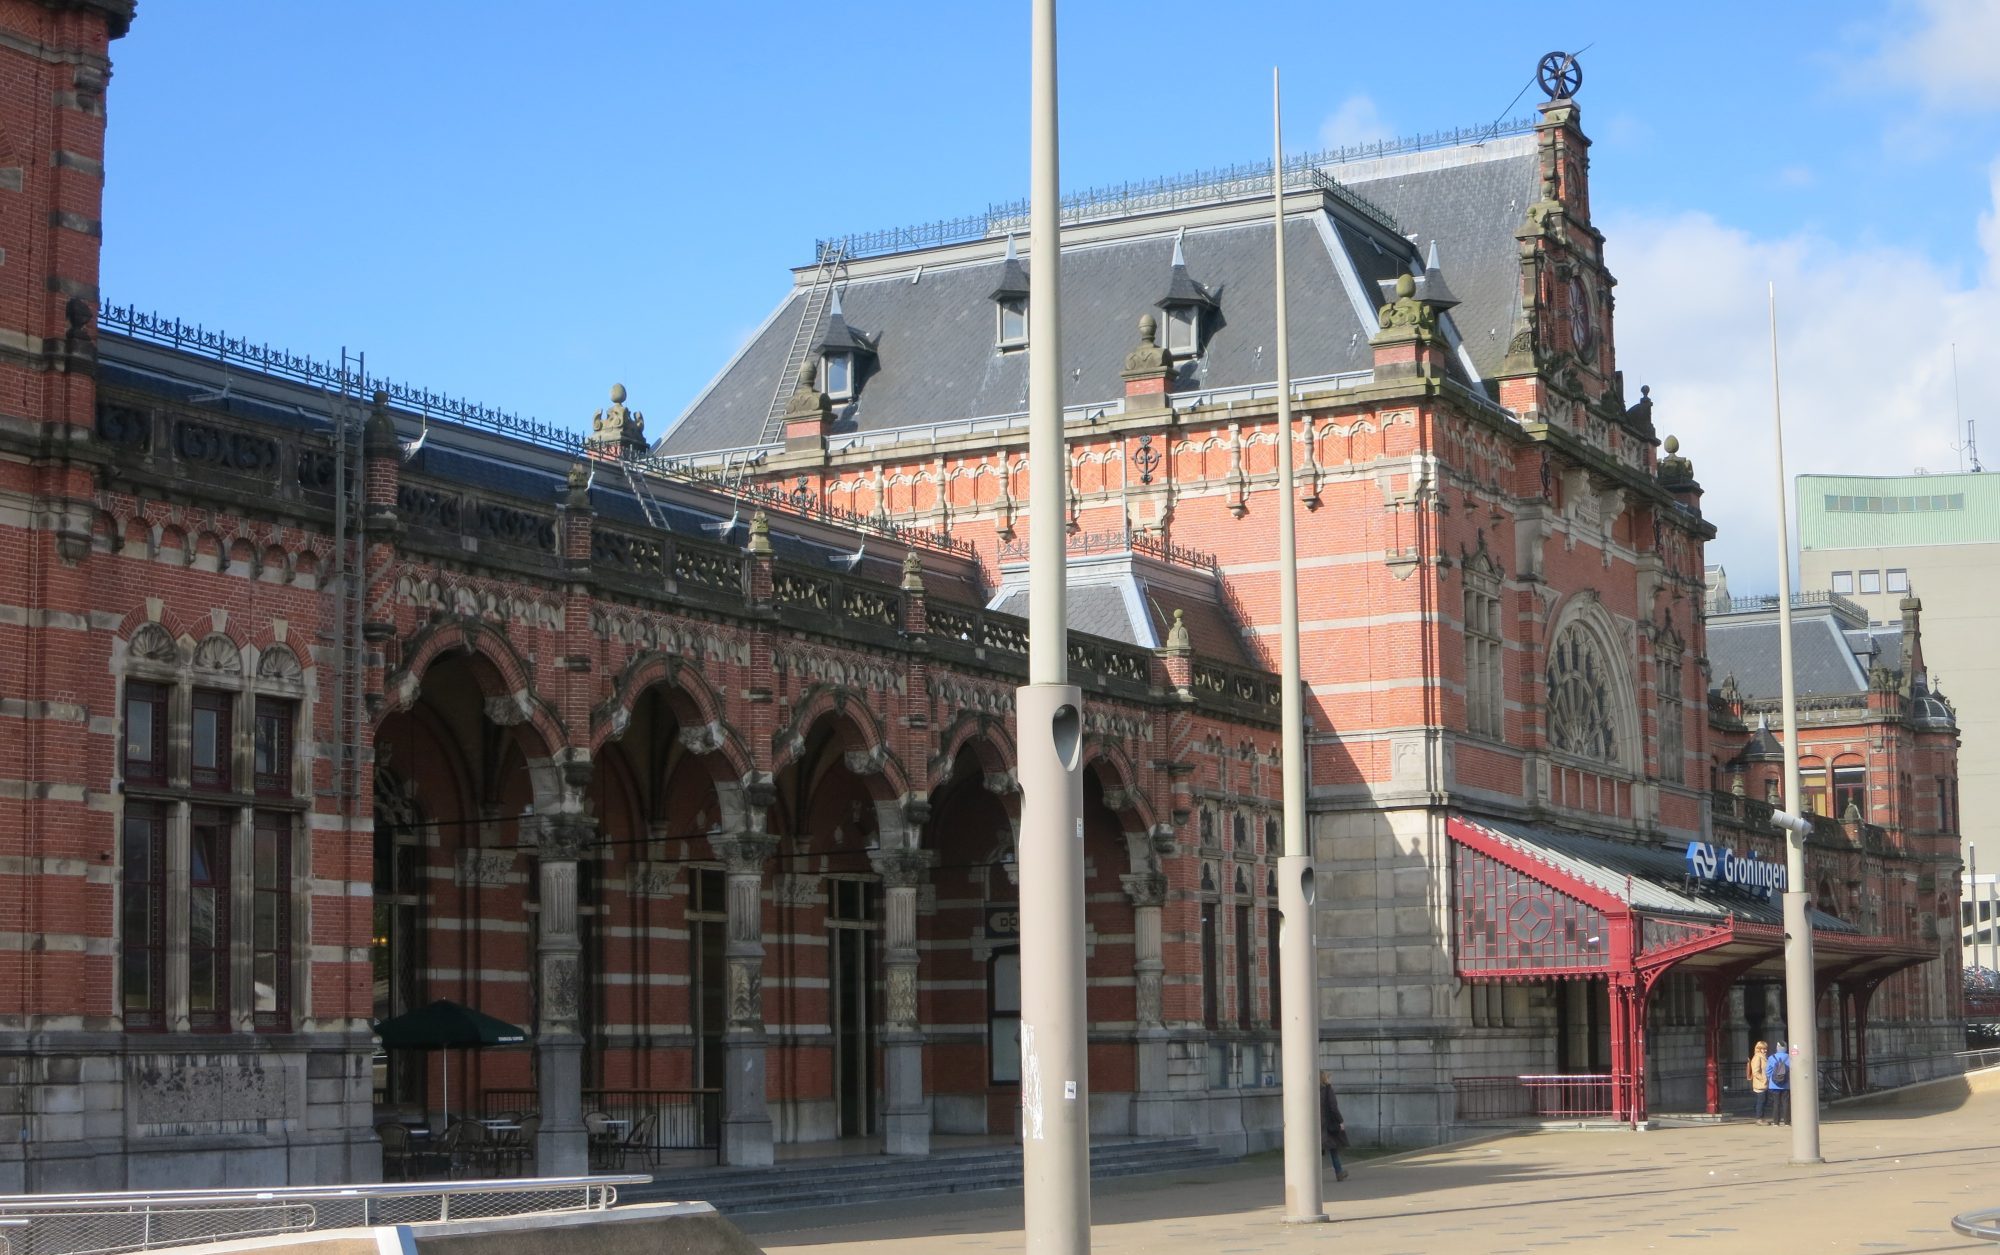 Groningen central train station